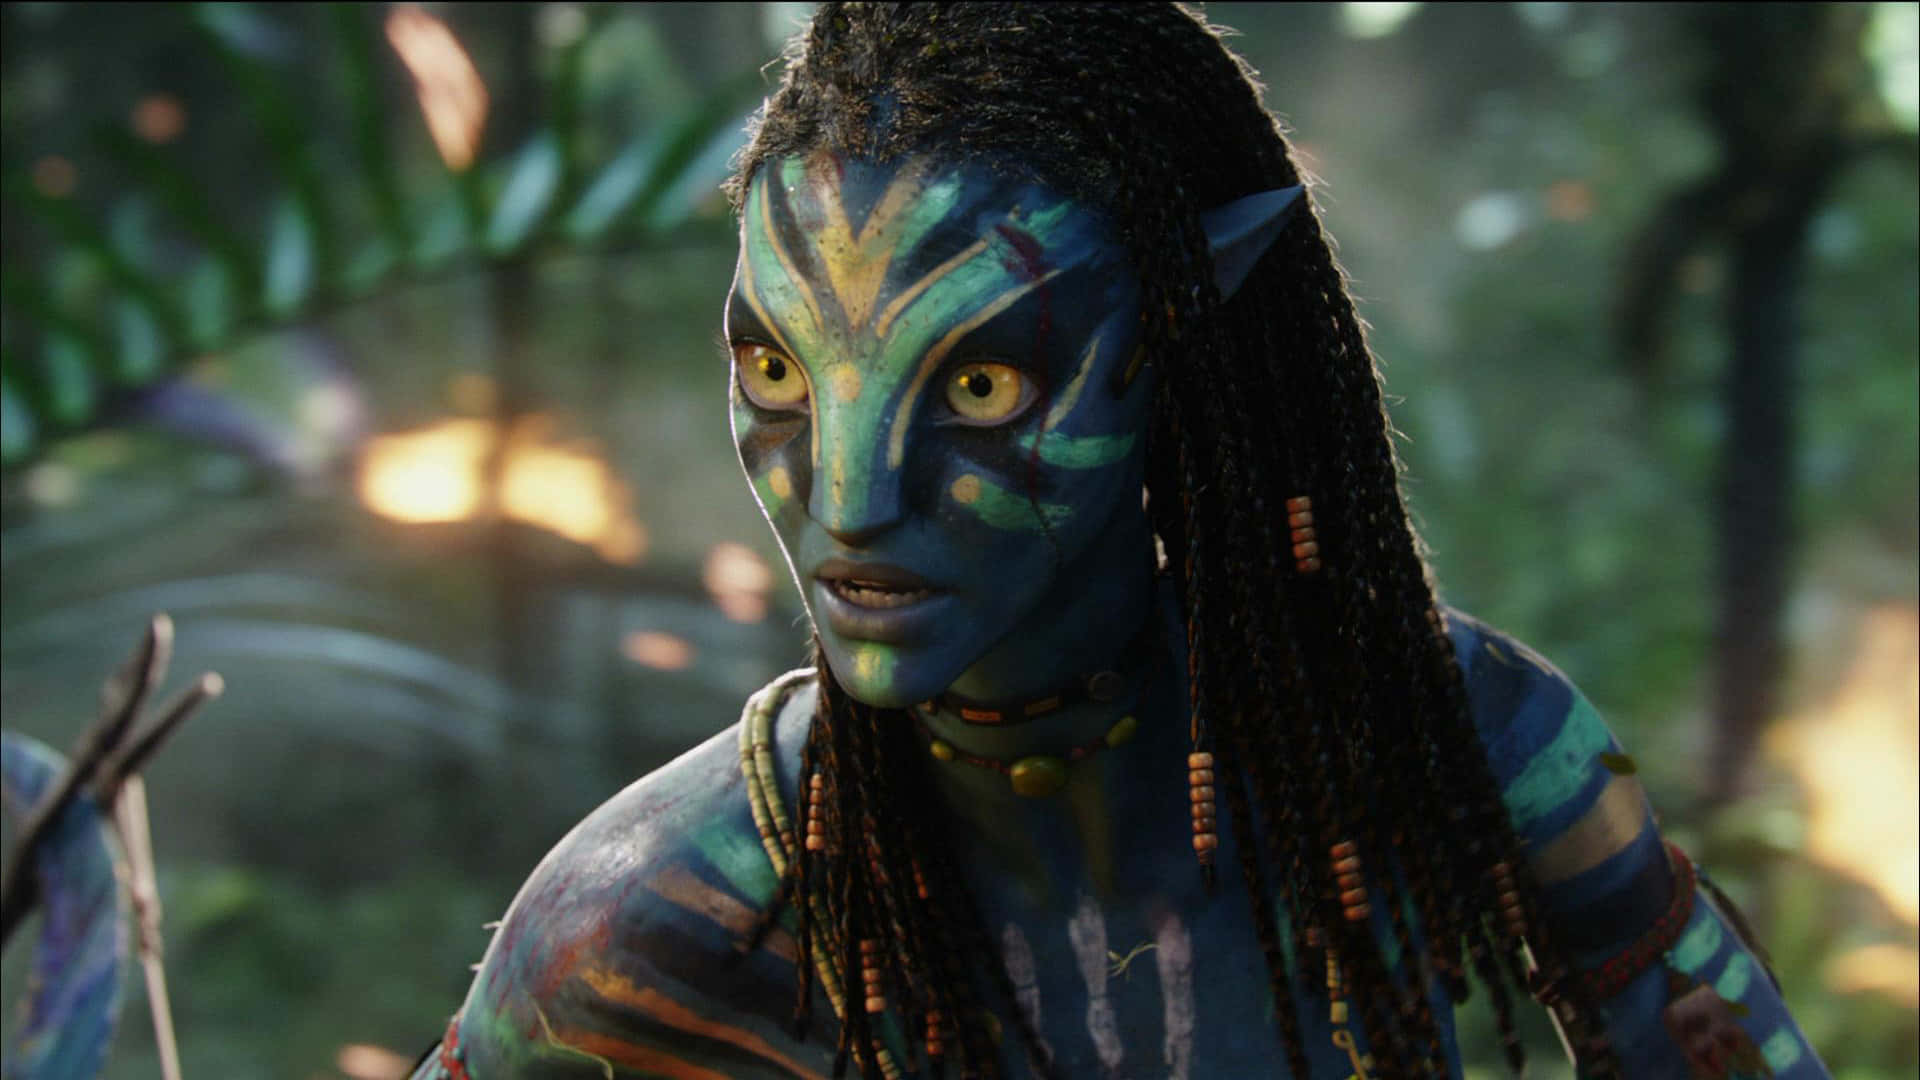 Explore the World of Pandora in Avatar